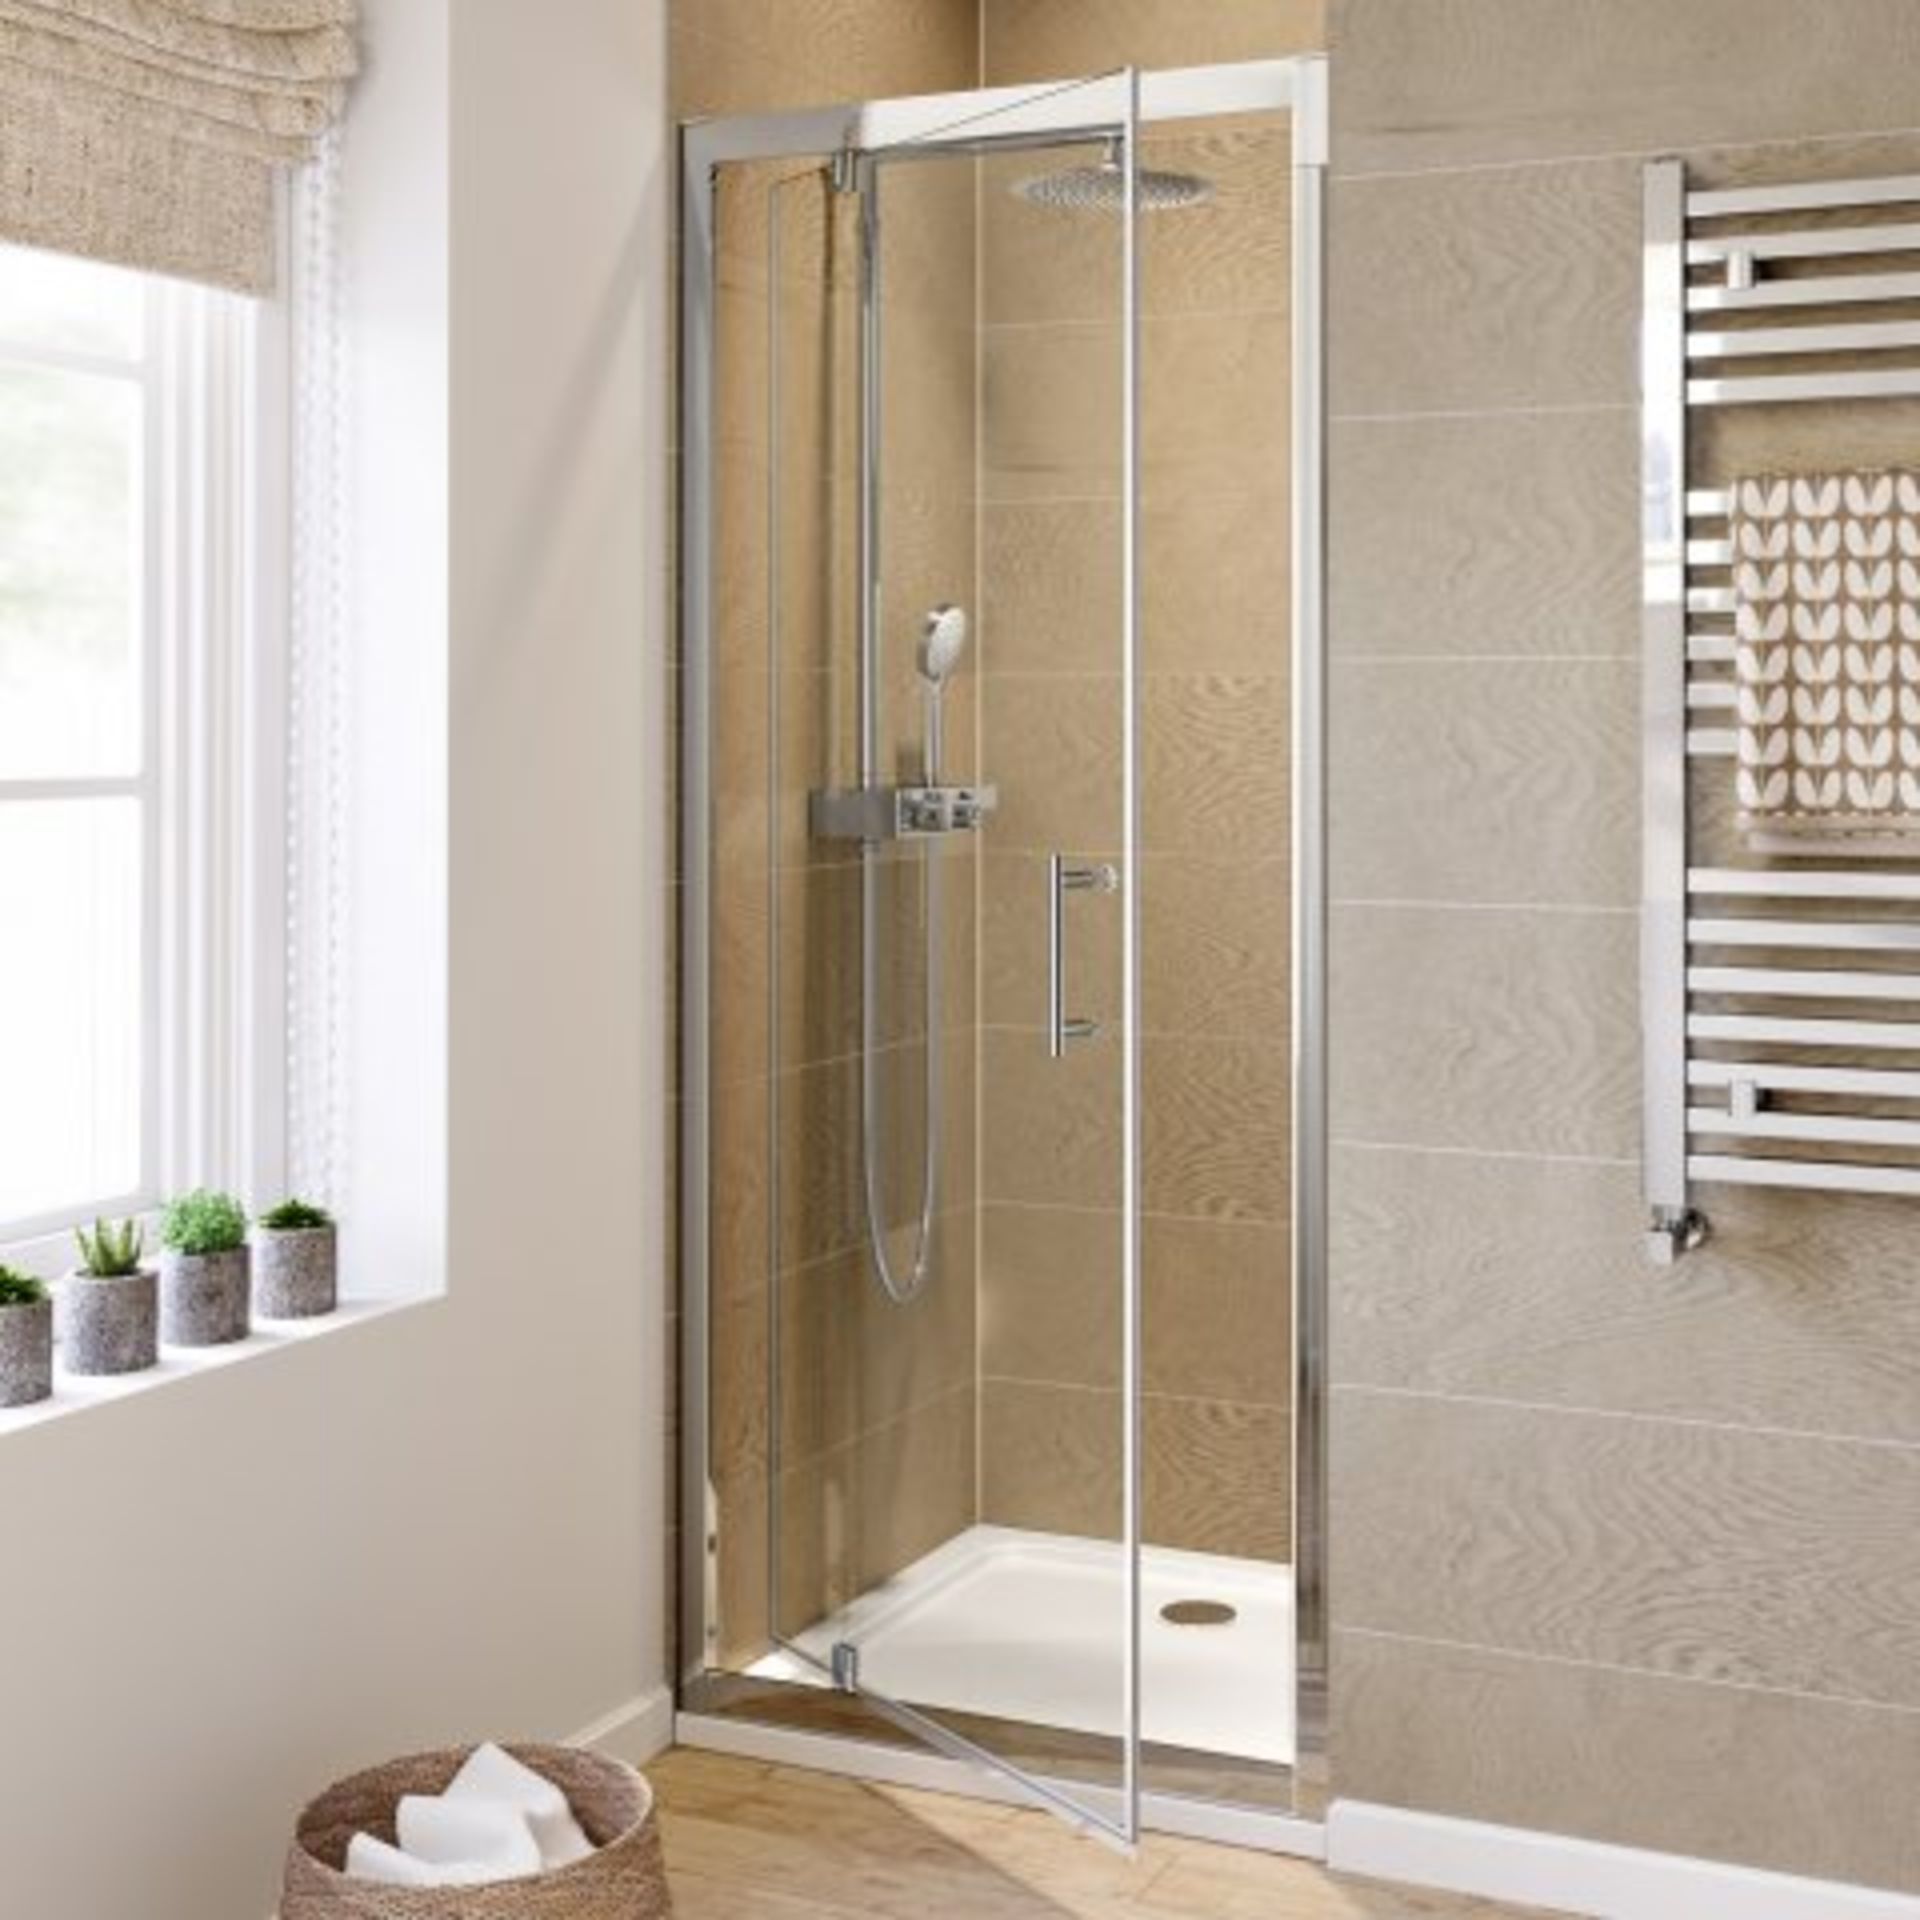 (I50) 760mm - 6mm - Elements Pivot Shower Door. RRP £299.99. Essential Design Our standard range